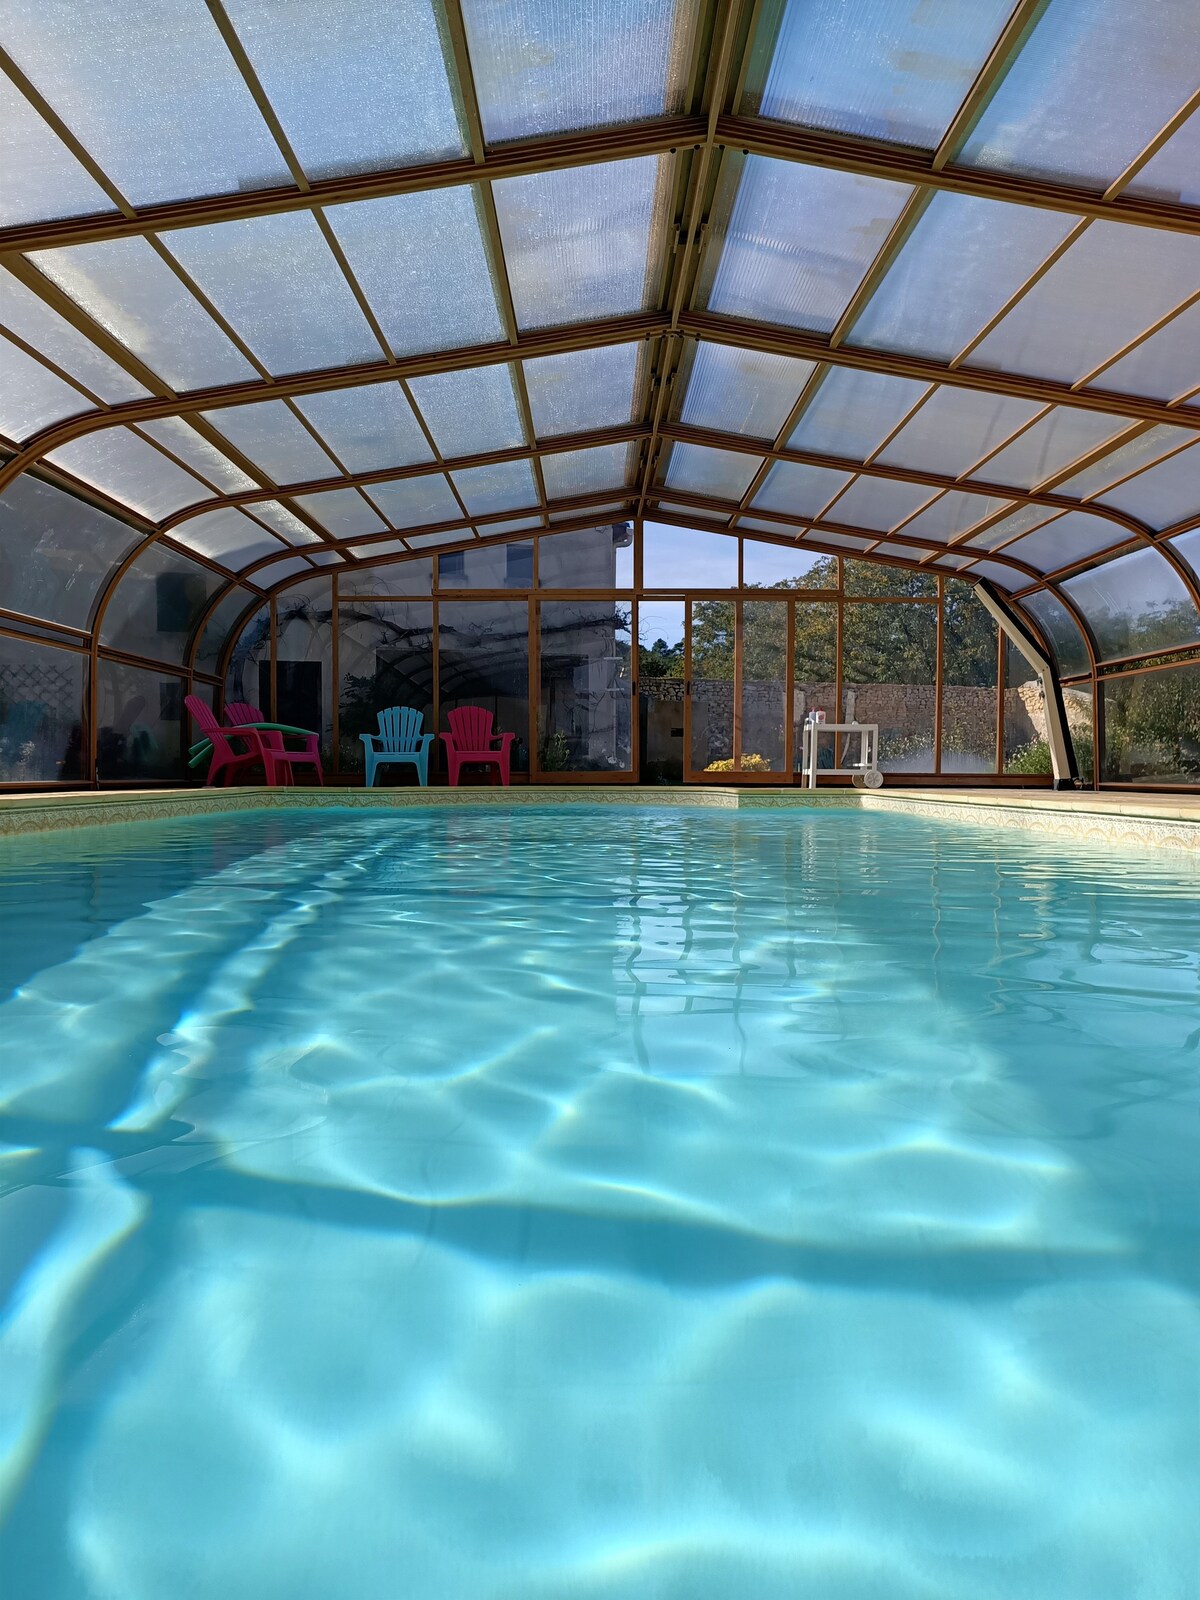 Gîte Sarlat Périgord piscine chauffée couverte 10m